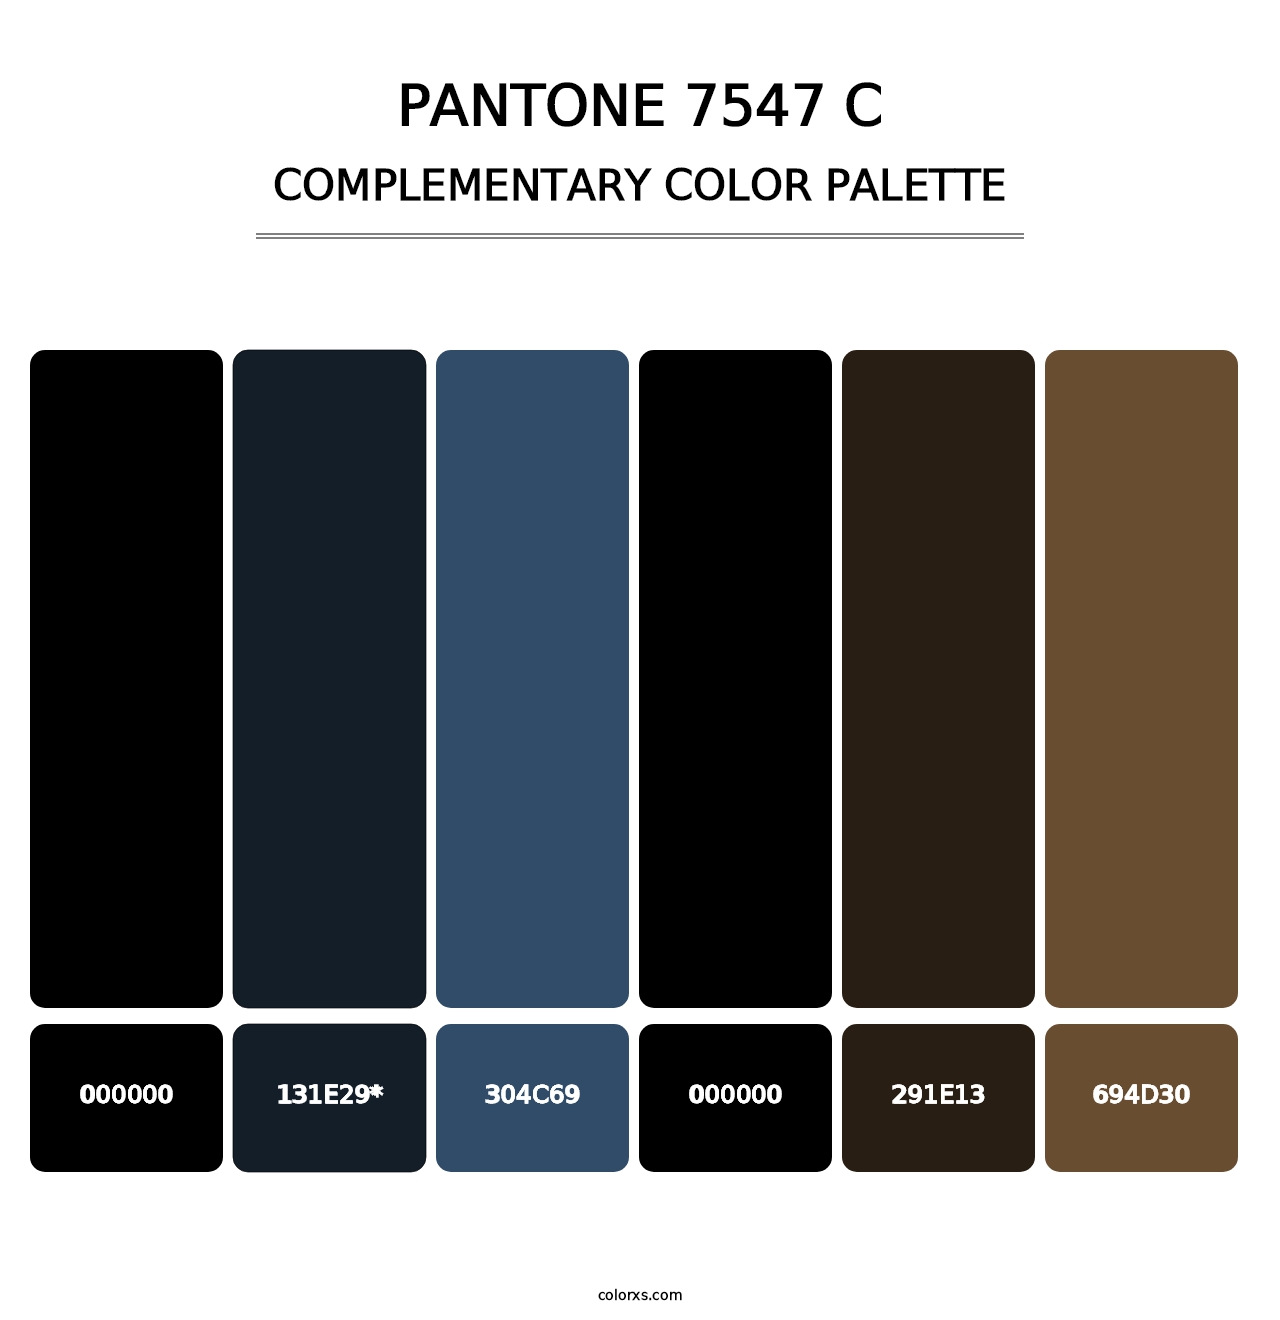 PANTONE 7547 C - Complementary Color Palette